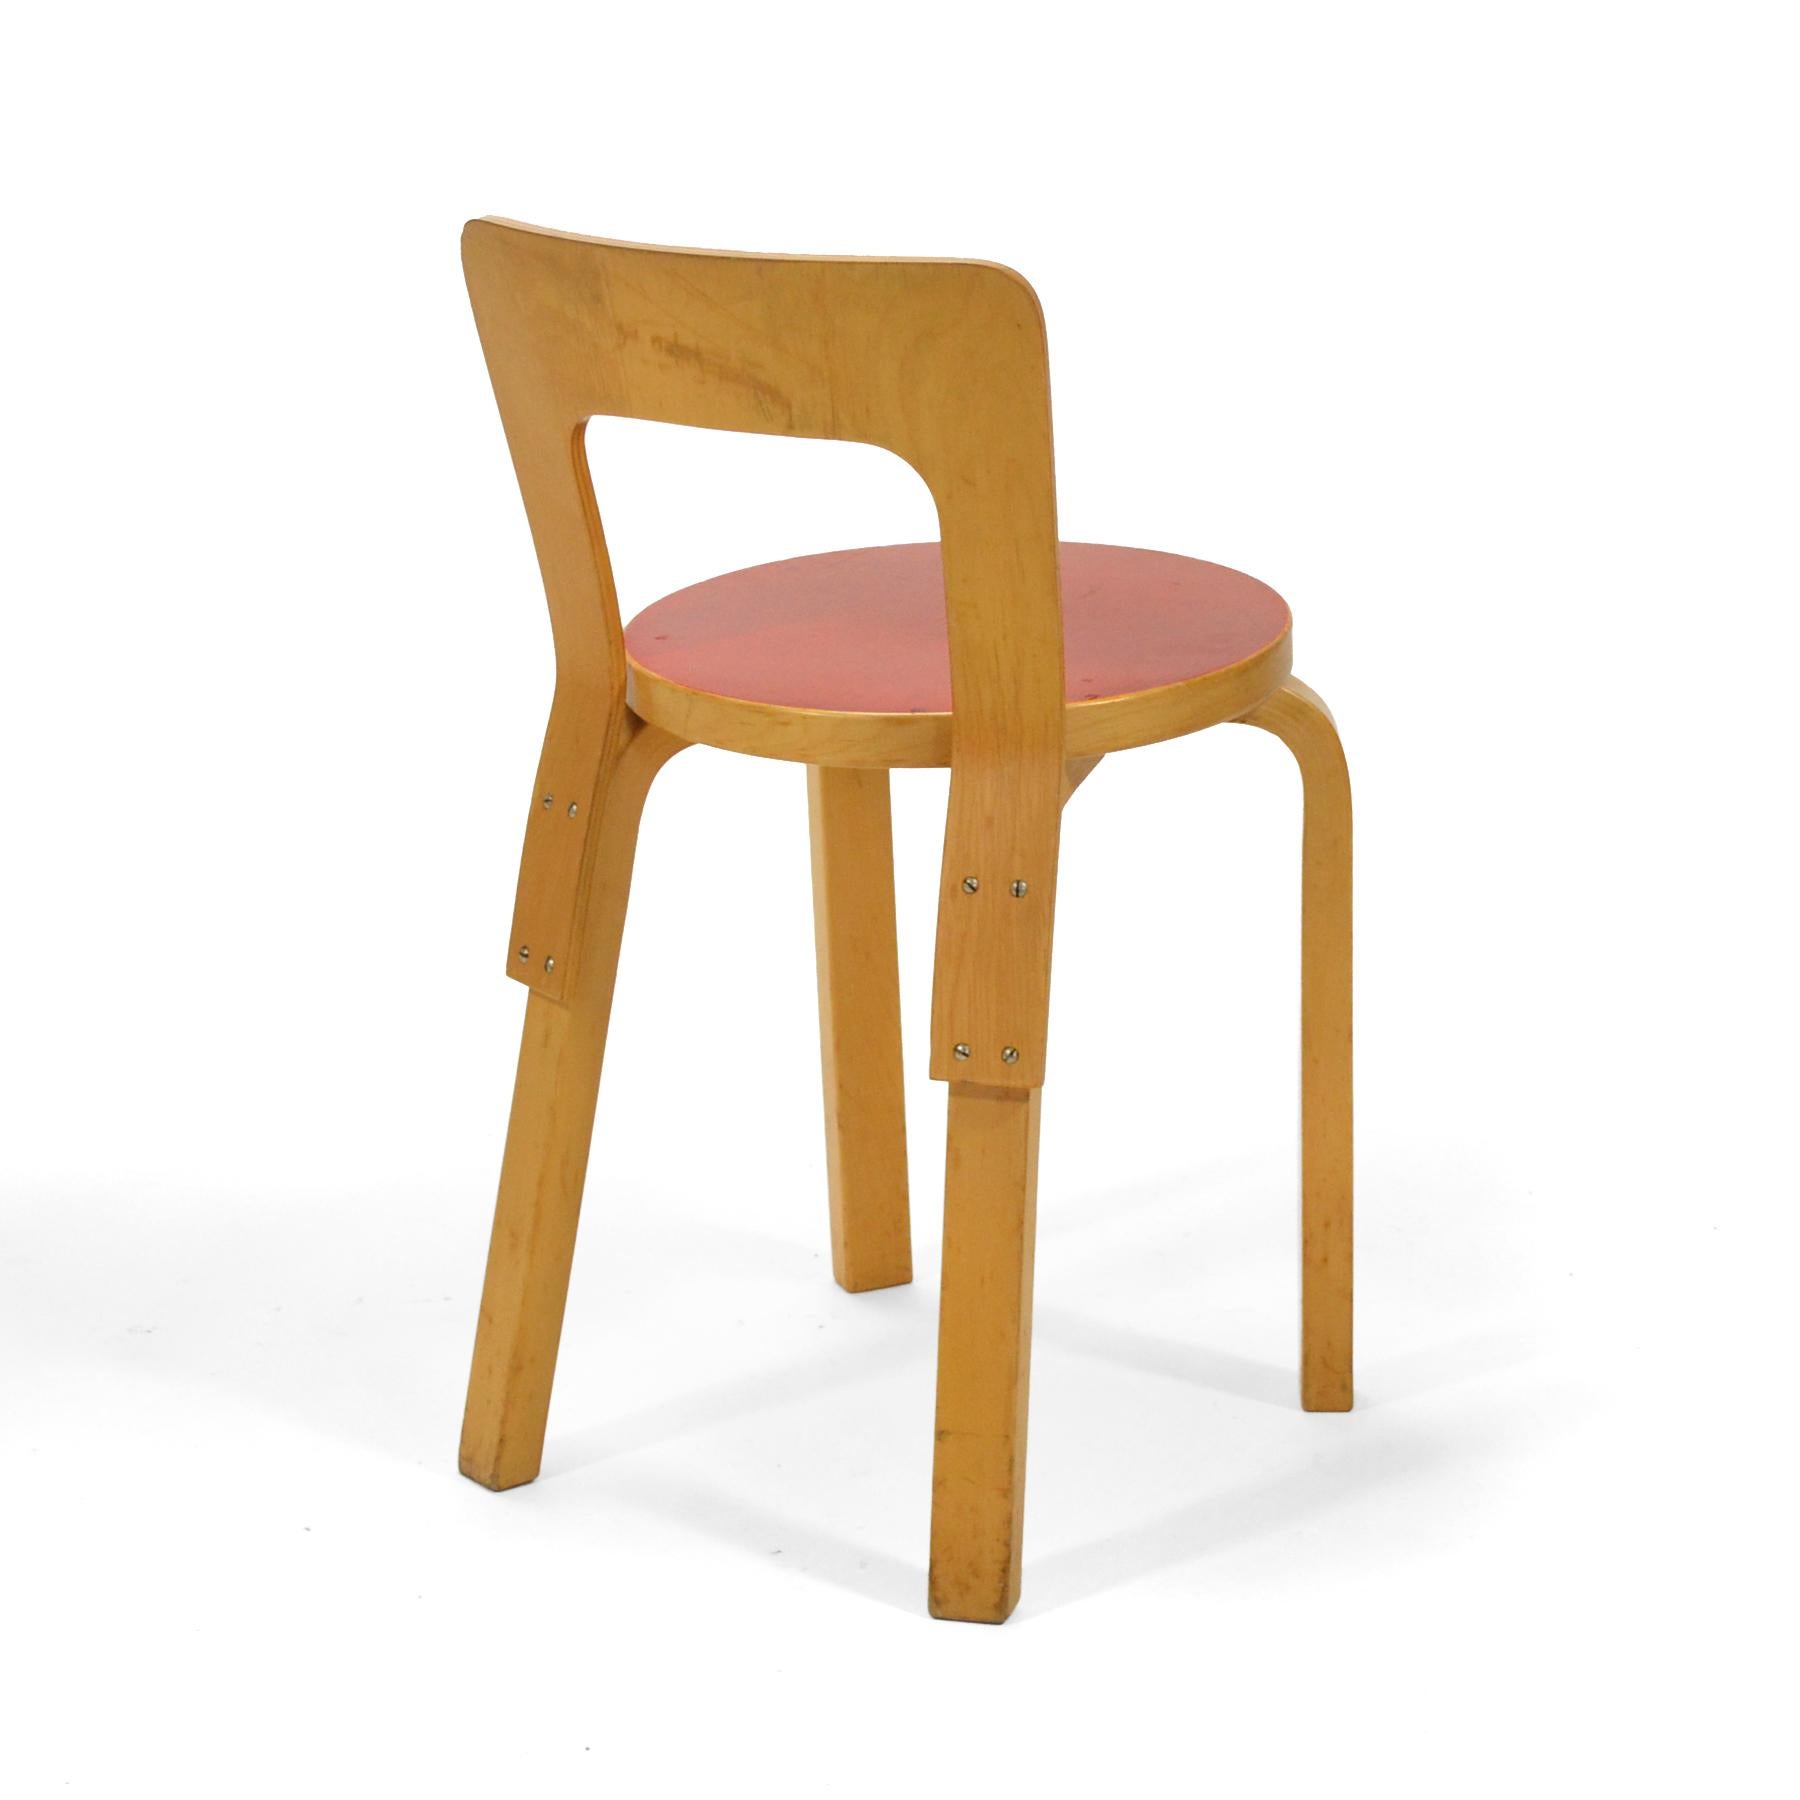 Scandinavian Modern Alvar Aalto Model 65 Chair with Red Seat by Artek